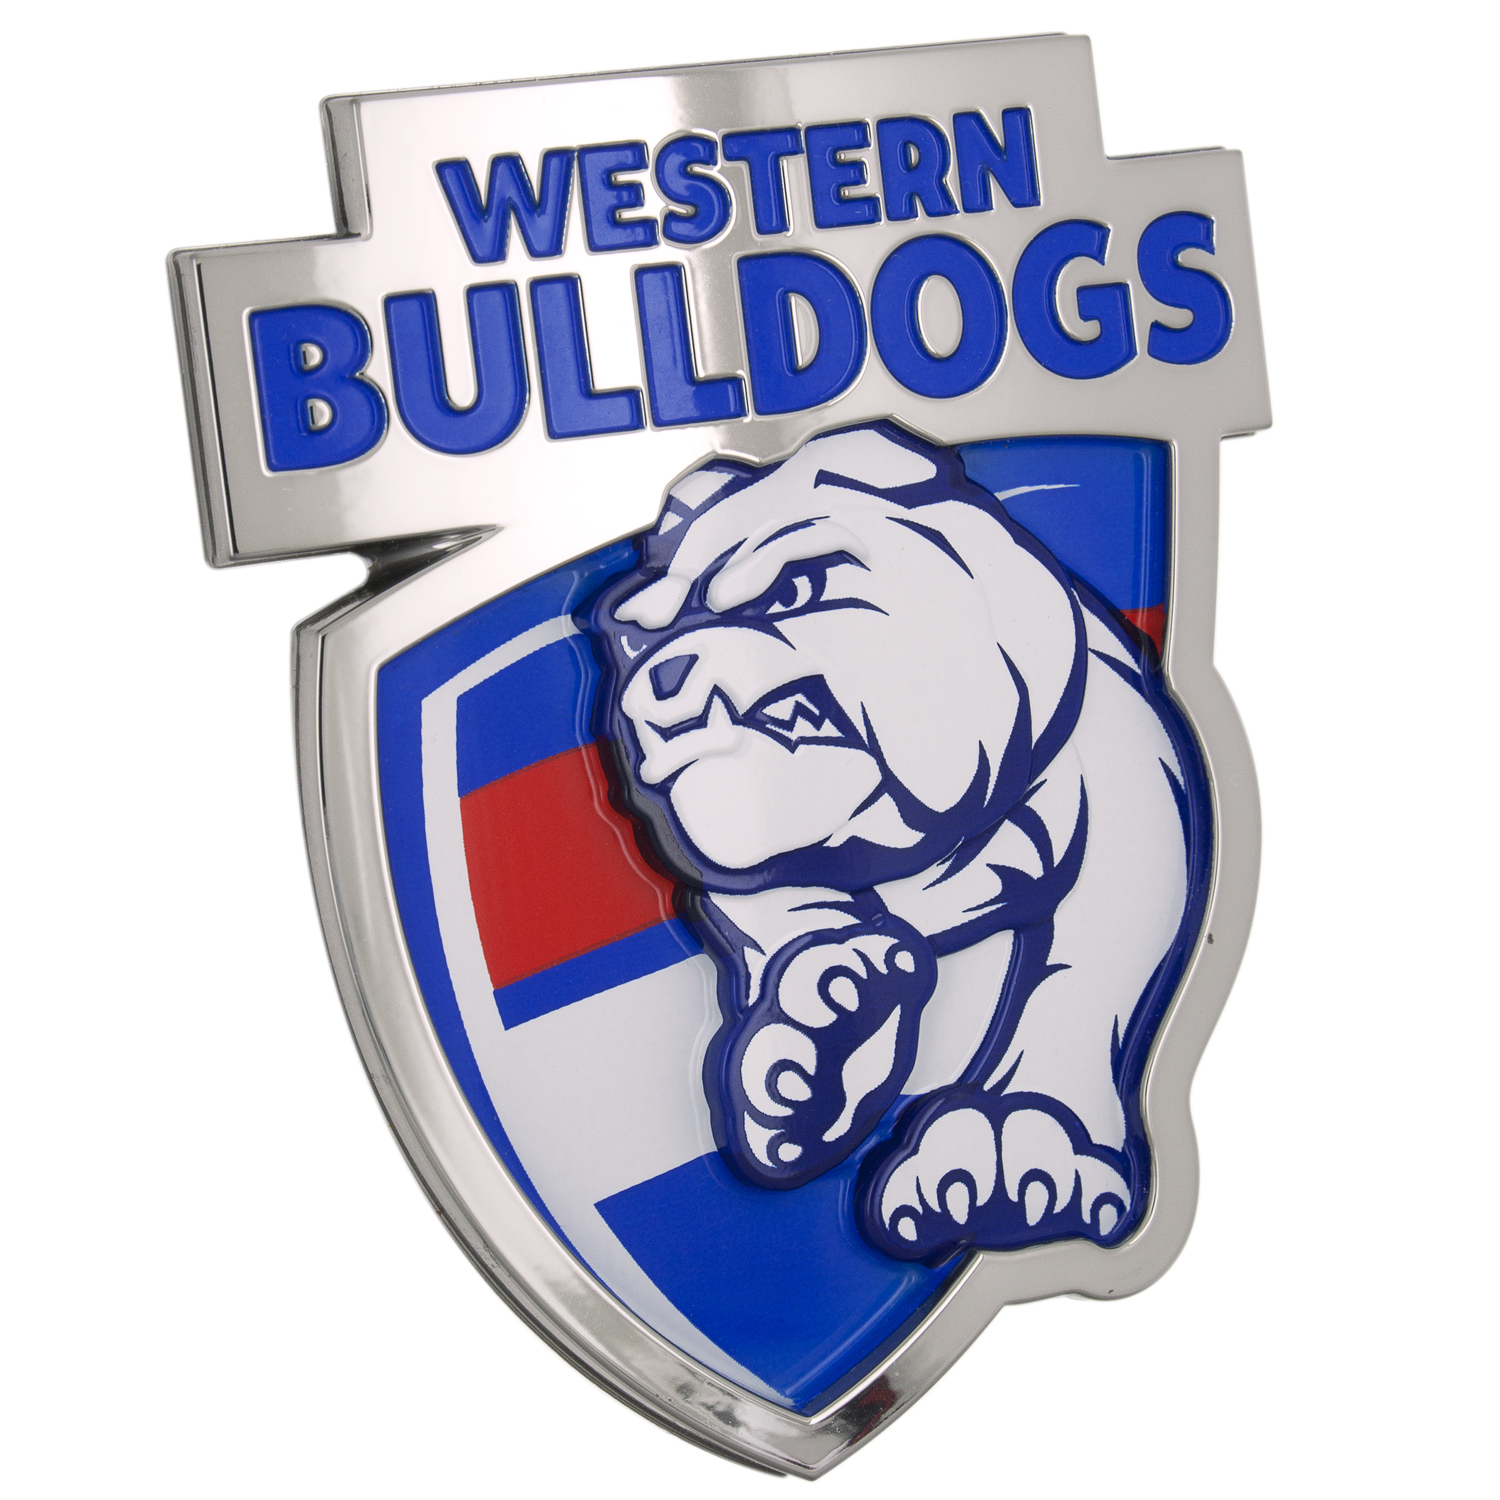 Western Bulldogs - Western Bulldogs Baby Beanie / The latest tweets from @westernbulldogs